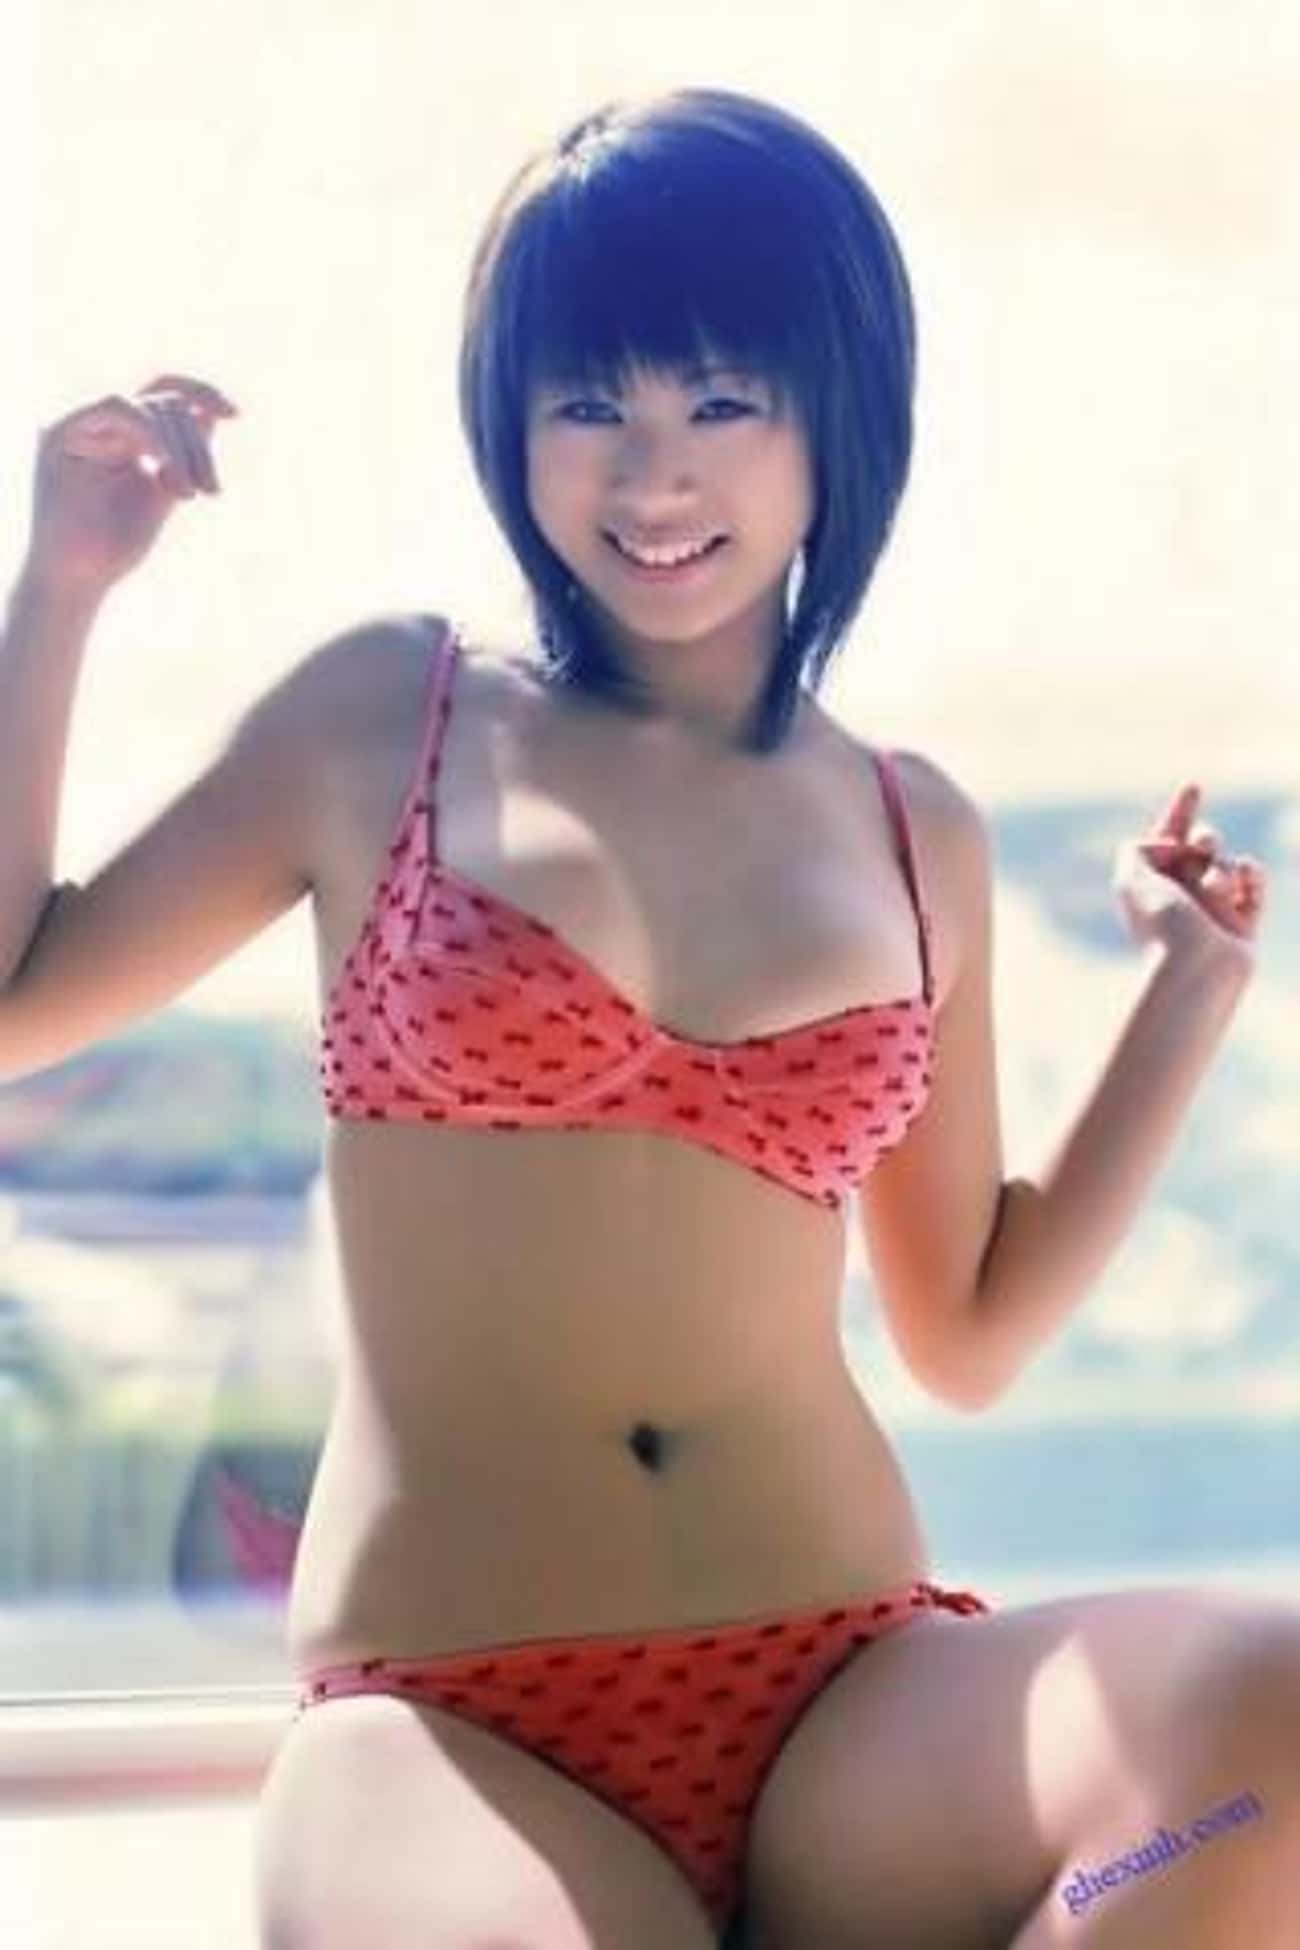 Yuka Kosaka